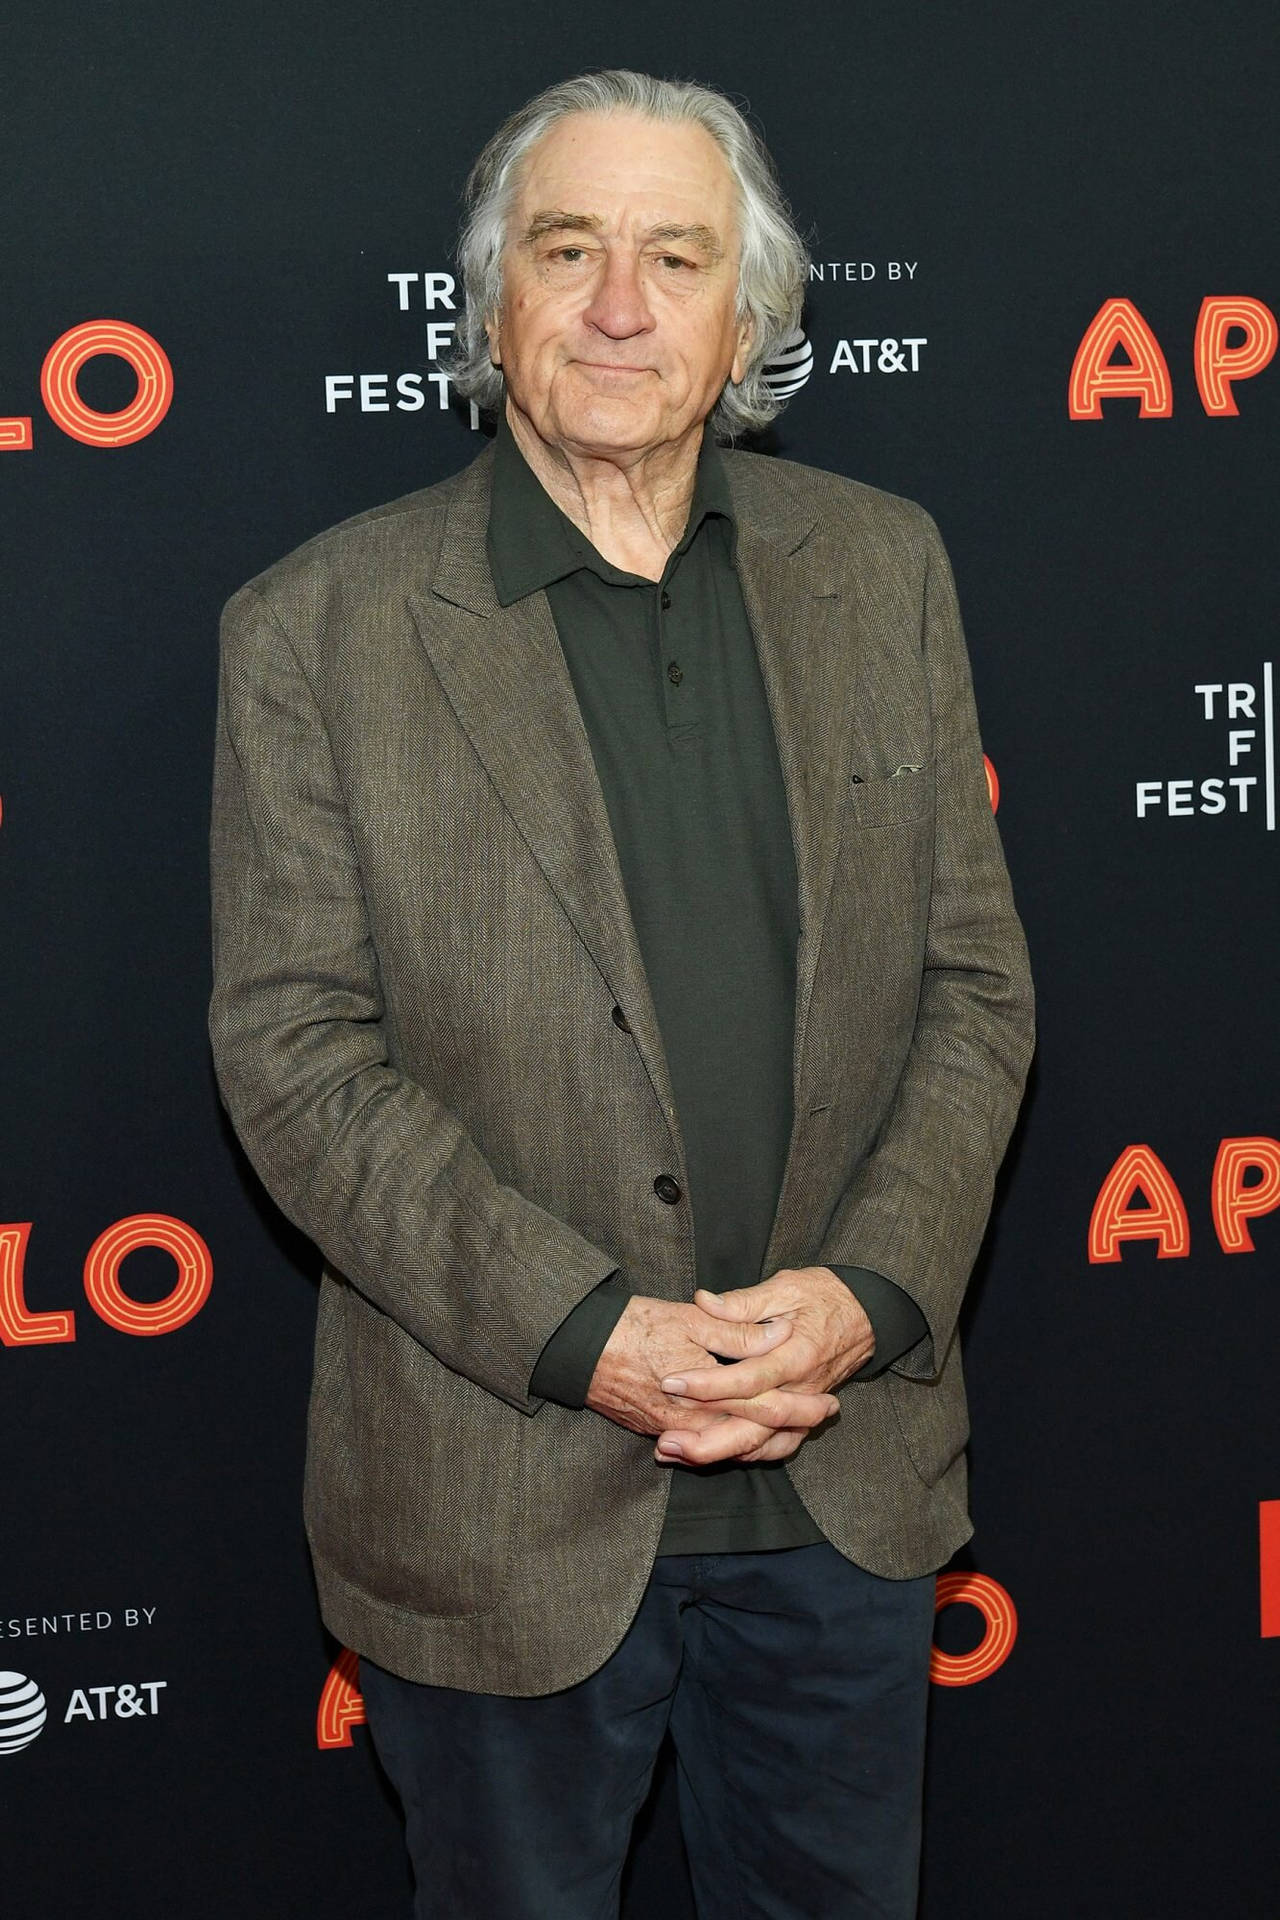 Robert De Niro On Stage At The Apollo Theater